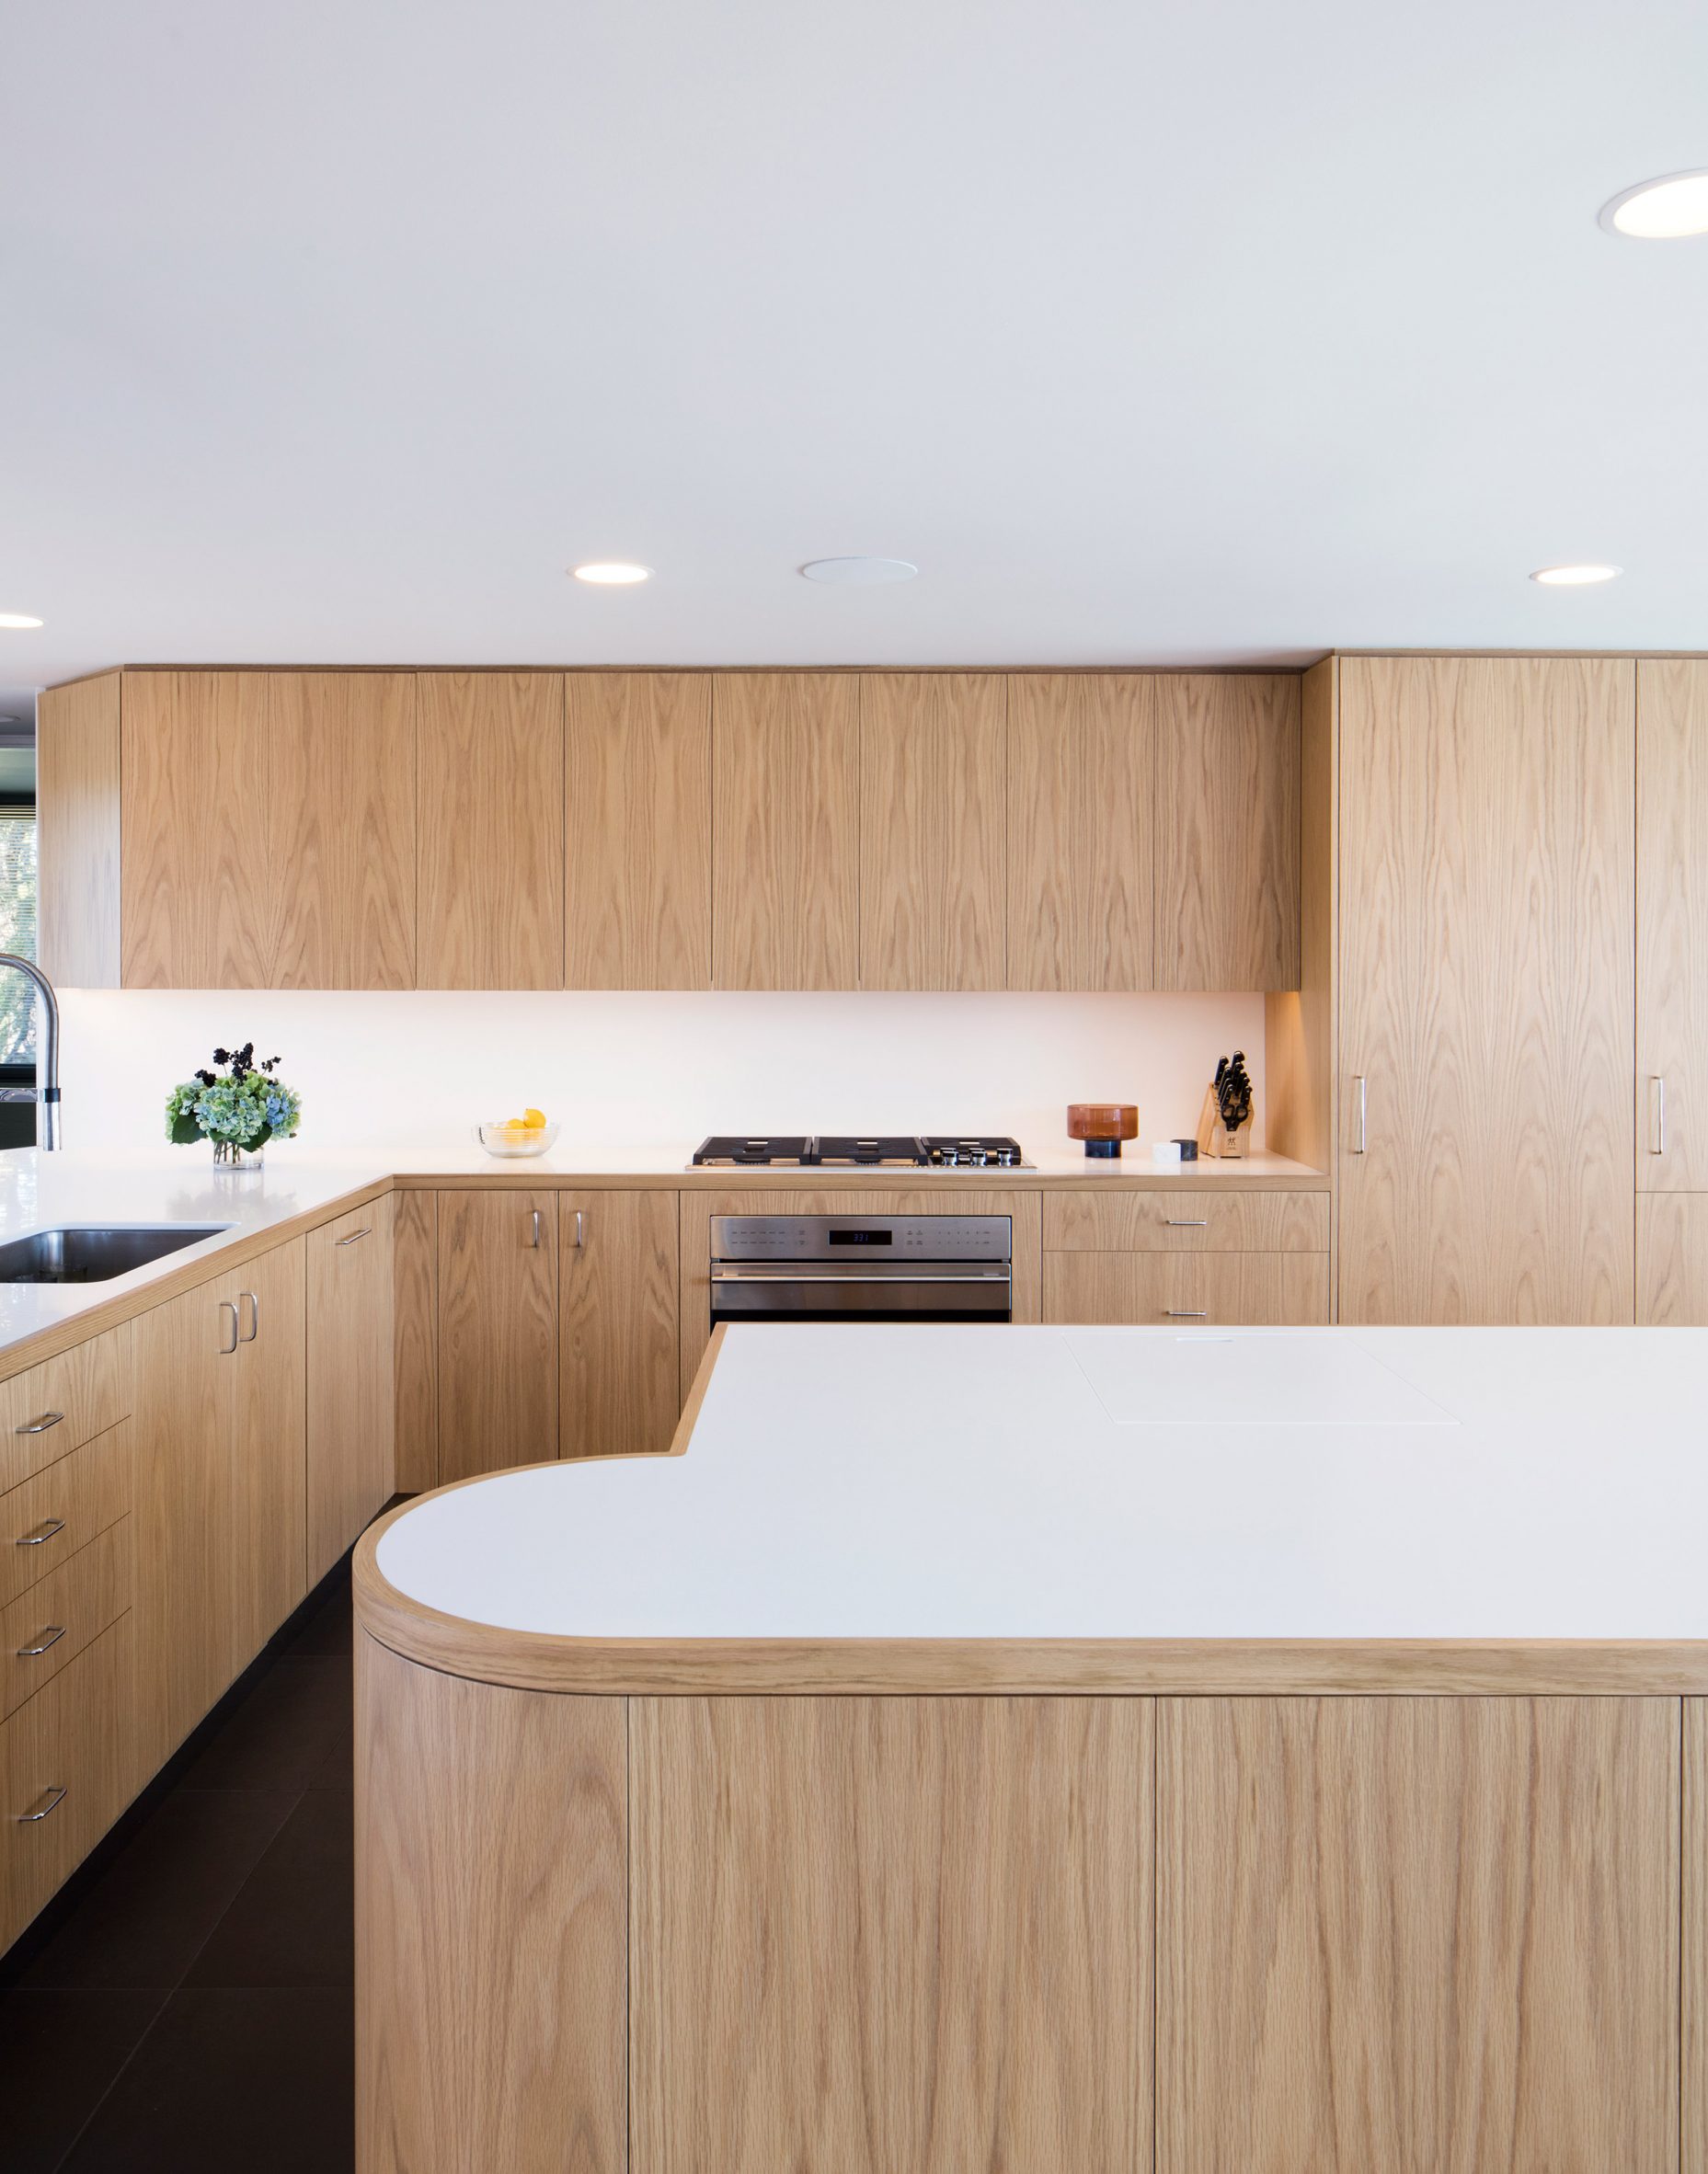 The kitchen boasts Corain countertops in a white hue